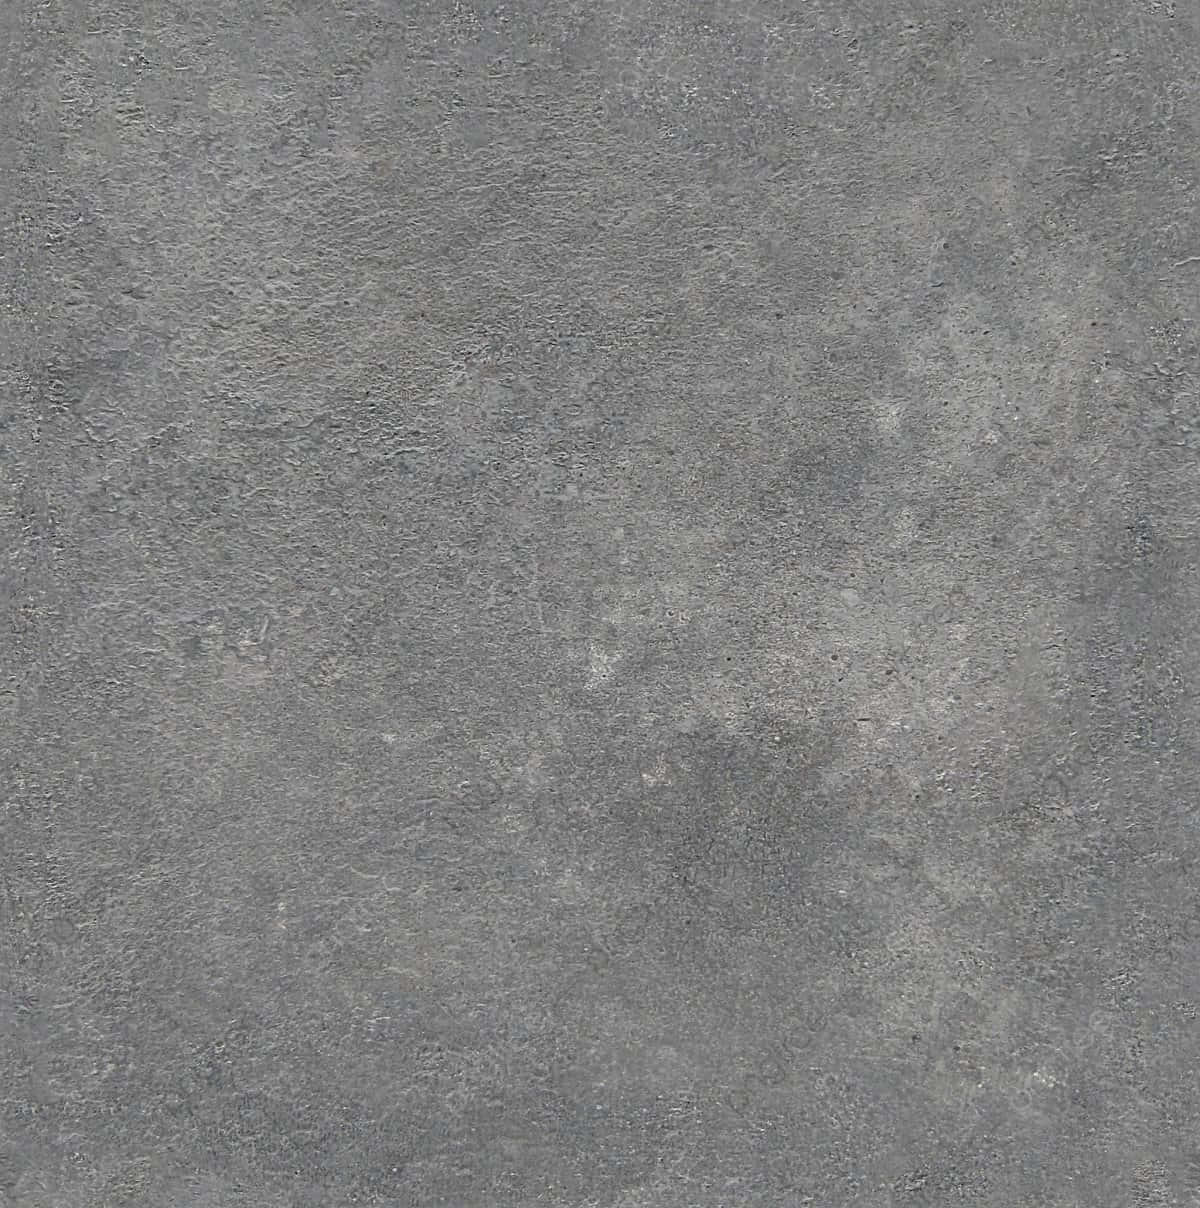 Dark Metallic Concrete Texture Picture